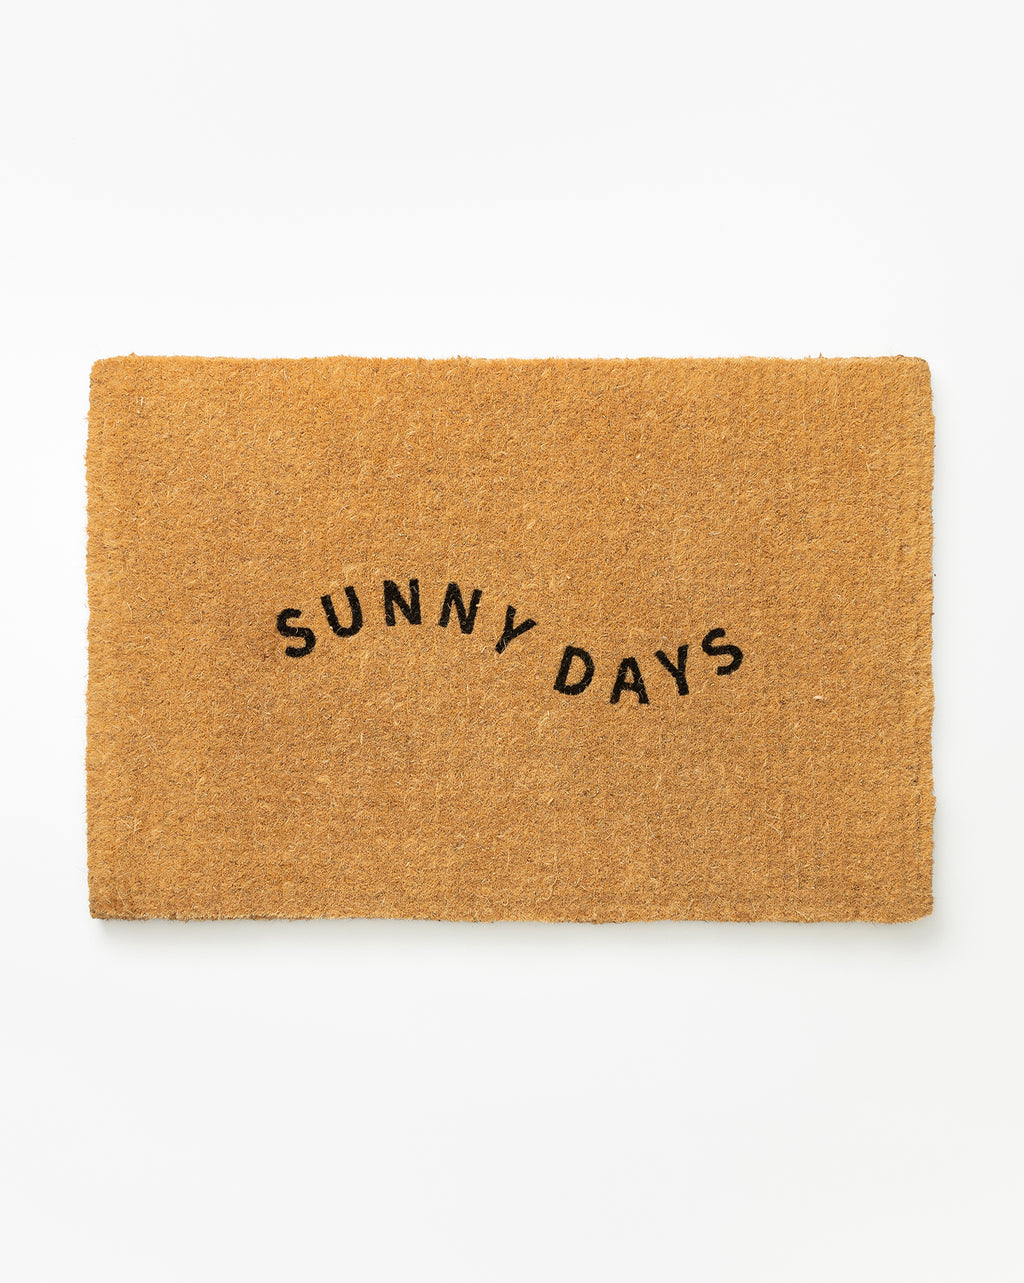 Sunny Days Doormat – McGee & Co.